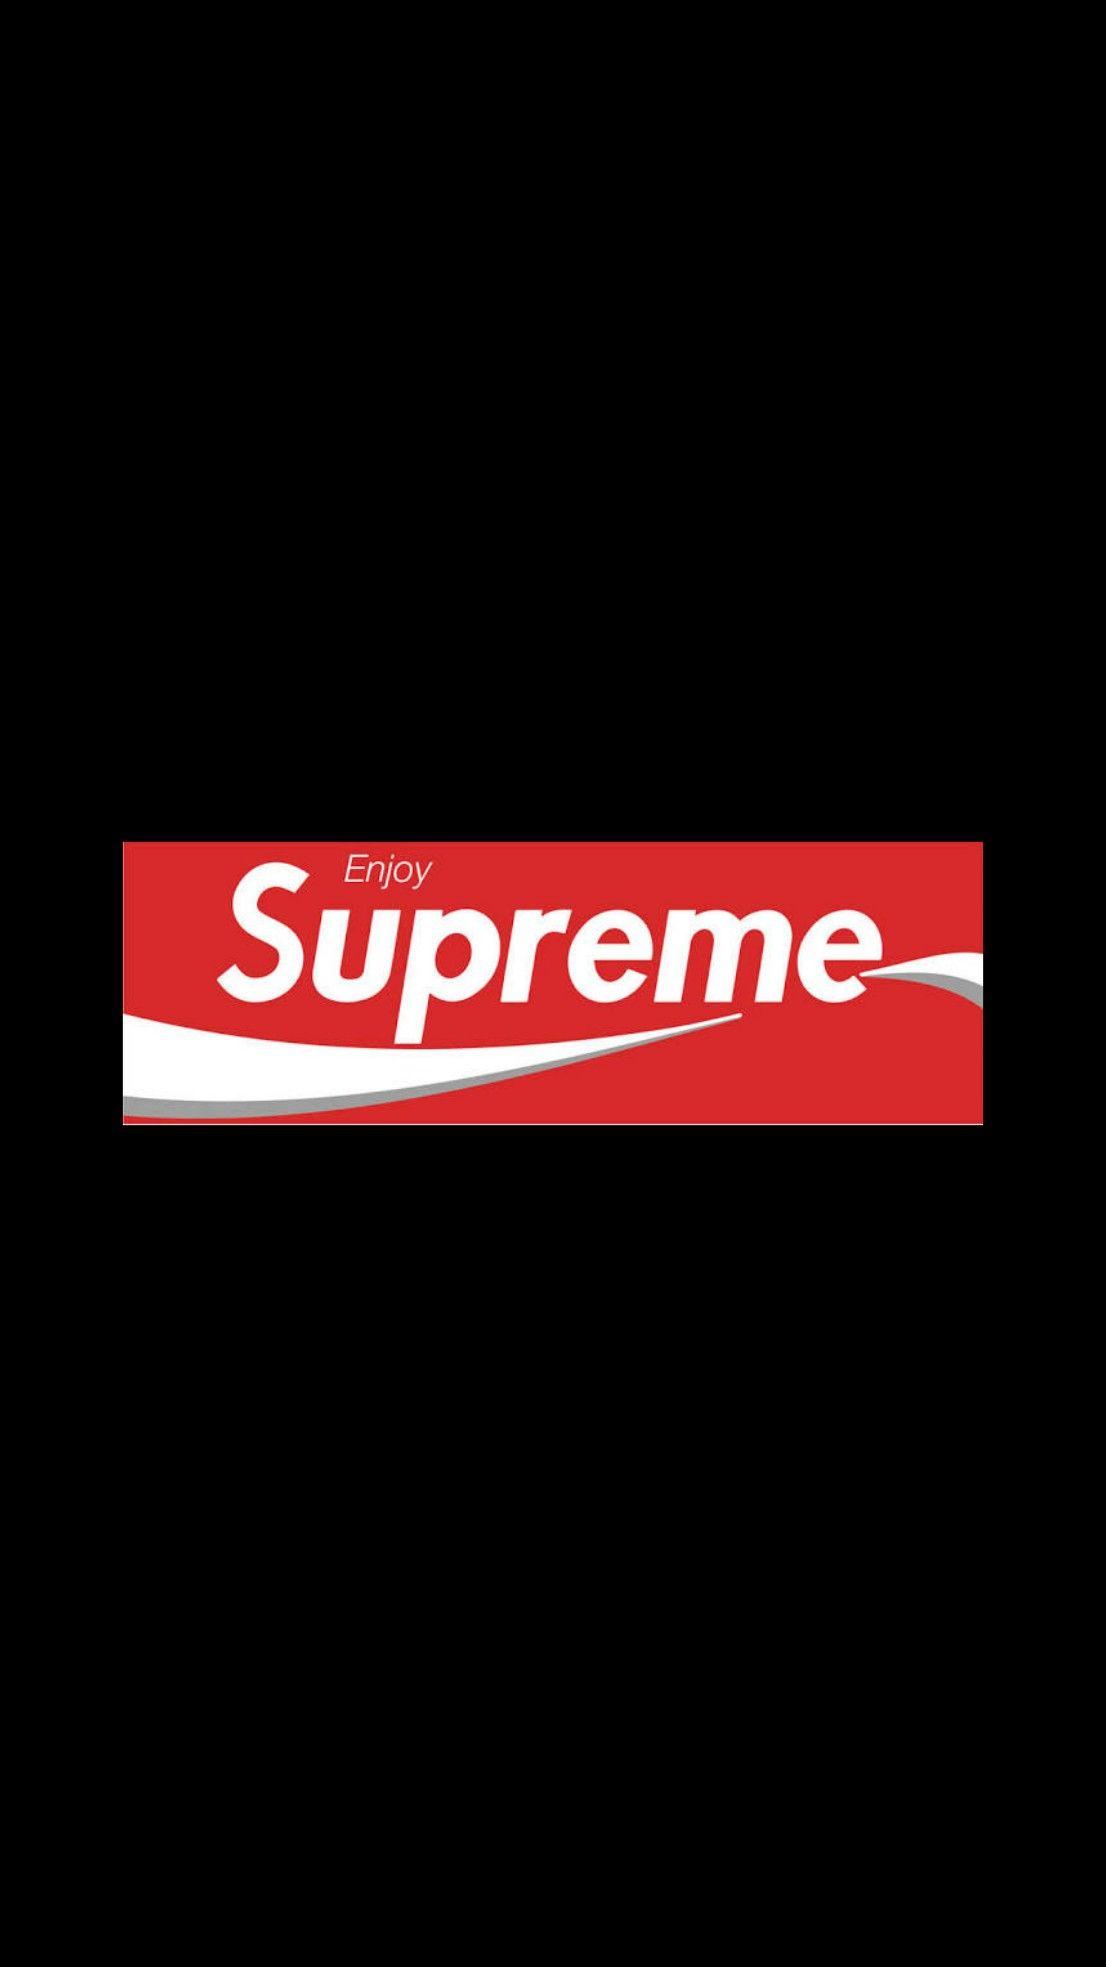 Cool Supreme Logo - LiftedMiles #SupremeWallpaper XIST. CreatedResearch